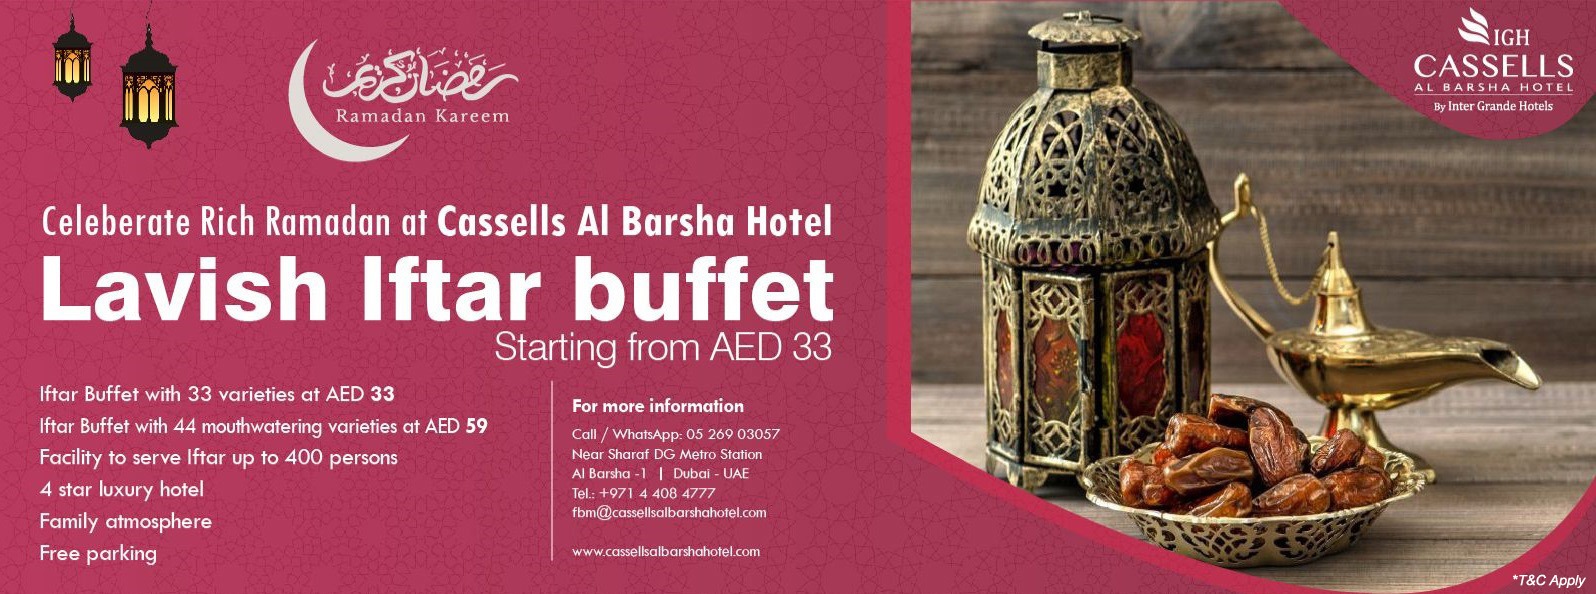 Iftar at Cassells Al Barsha Hotel - Coming Soon in UAE